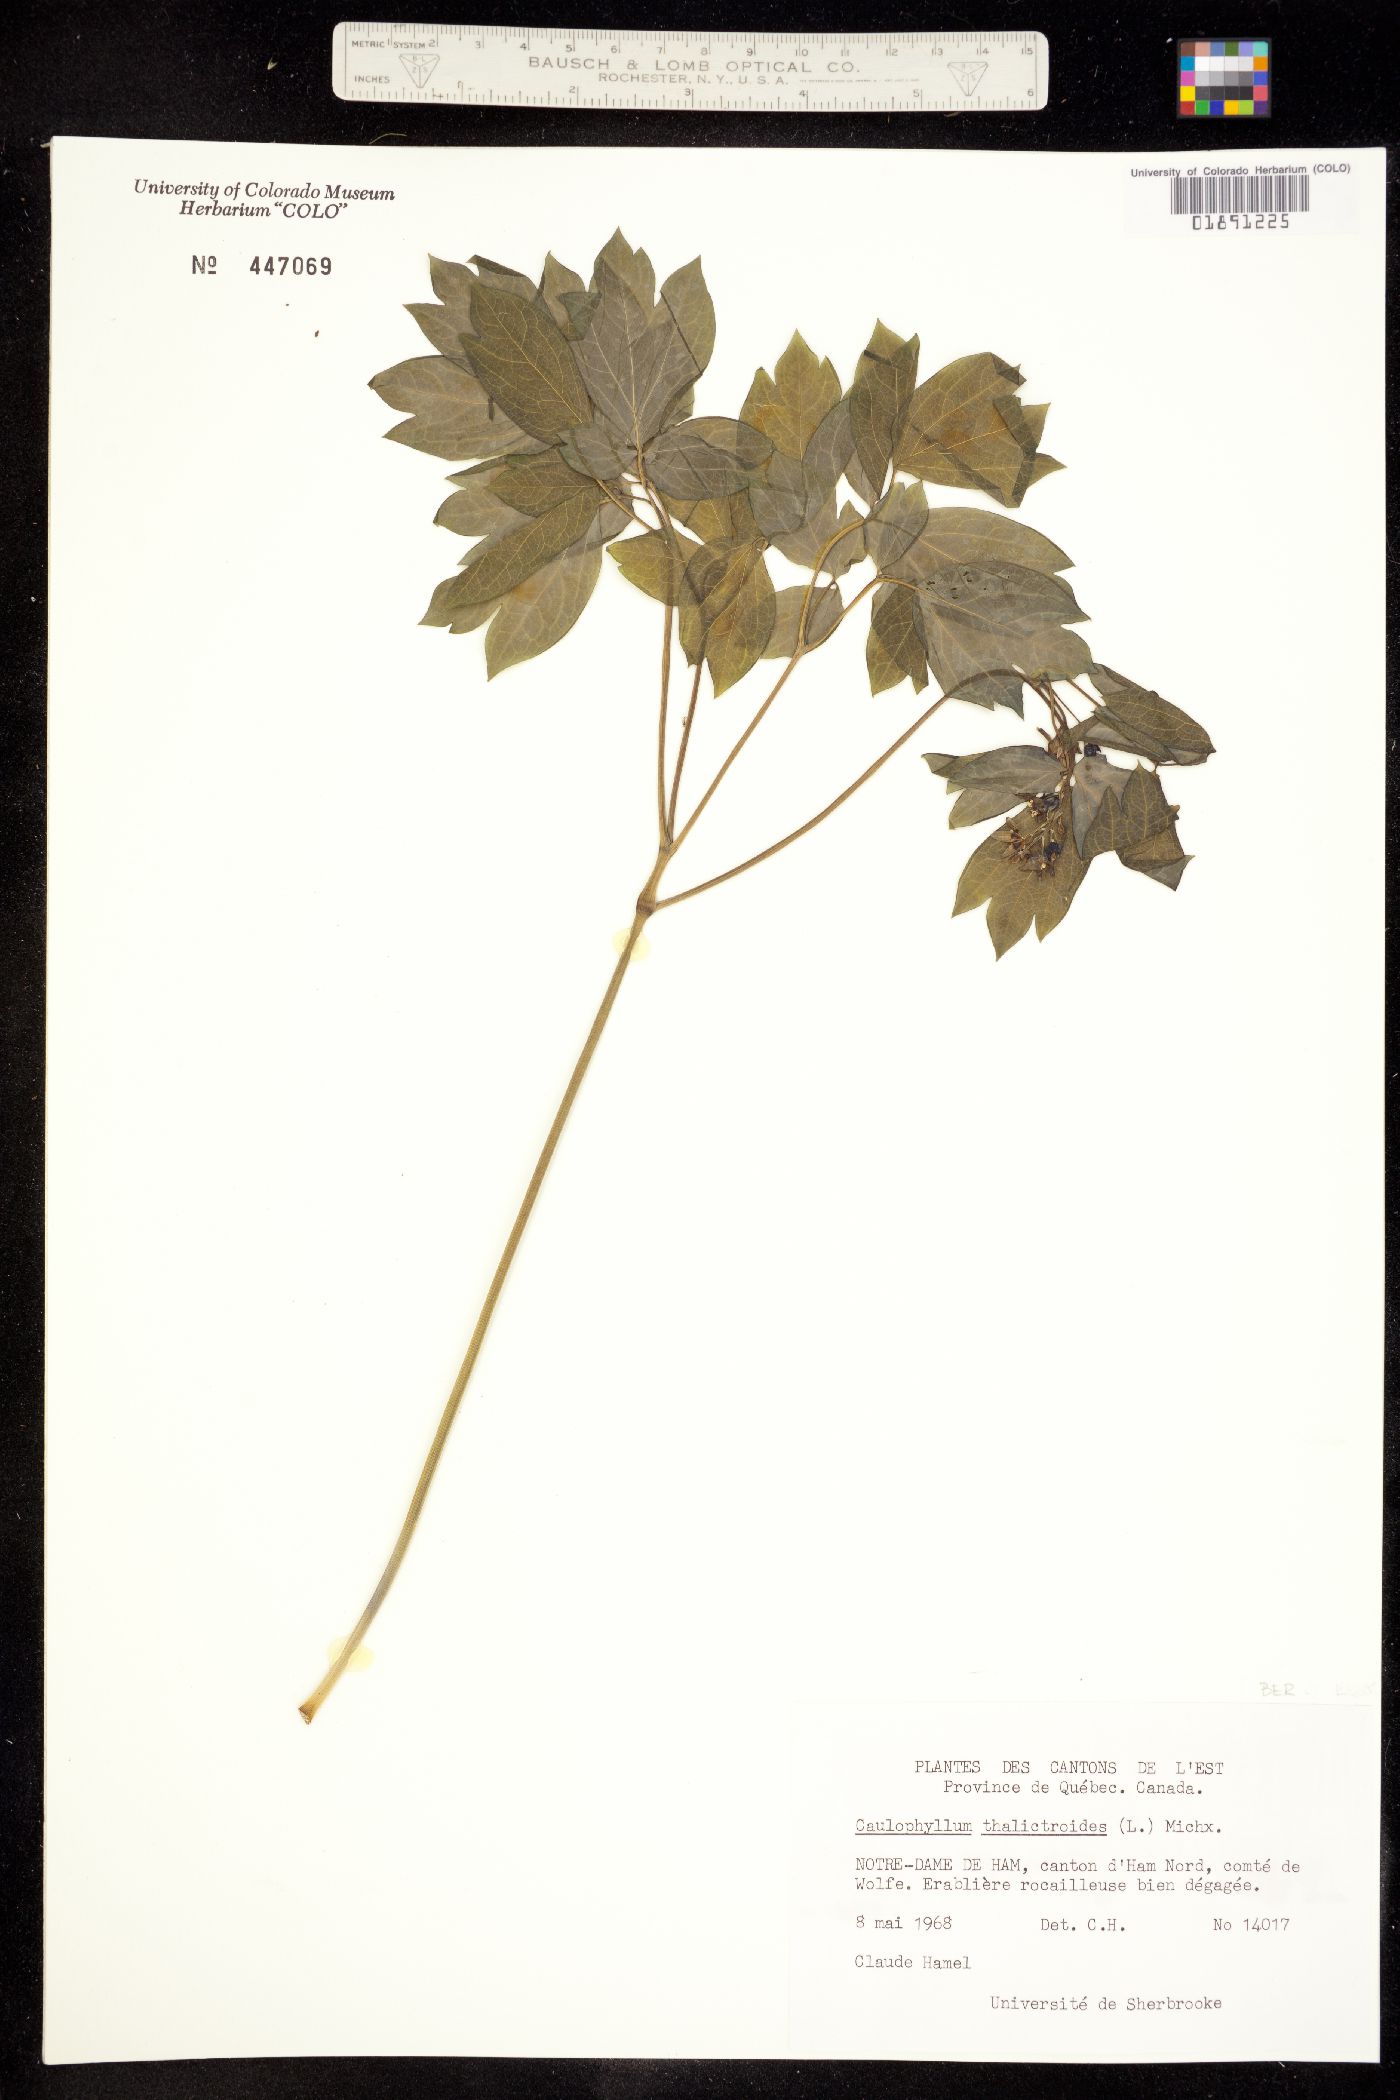 Caulophyllum image